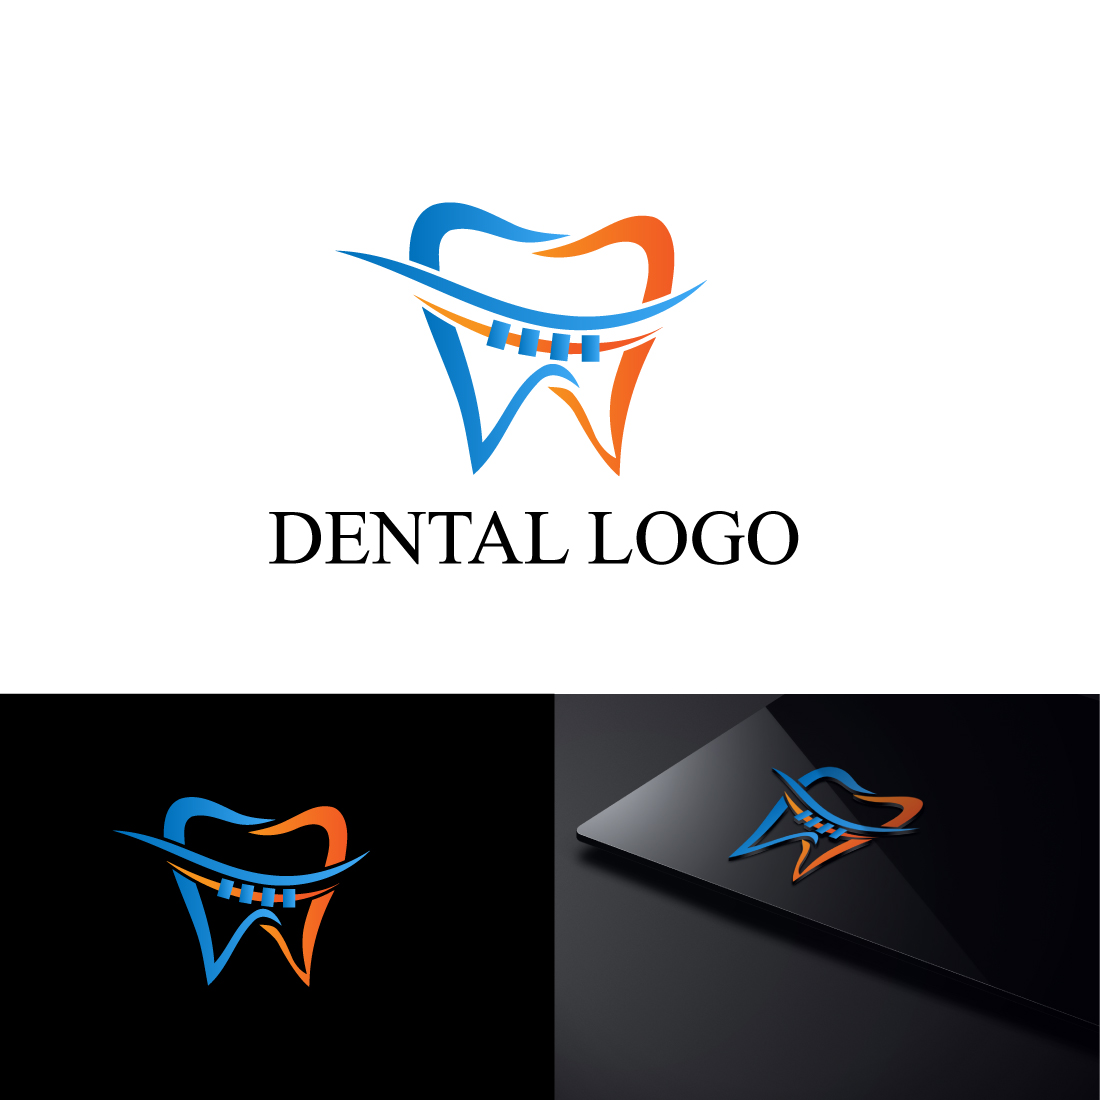 Dental logo, dental logo, dental, modern dental logo, dental icon, dental company logo, dental business logo preview image.